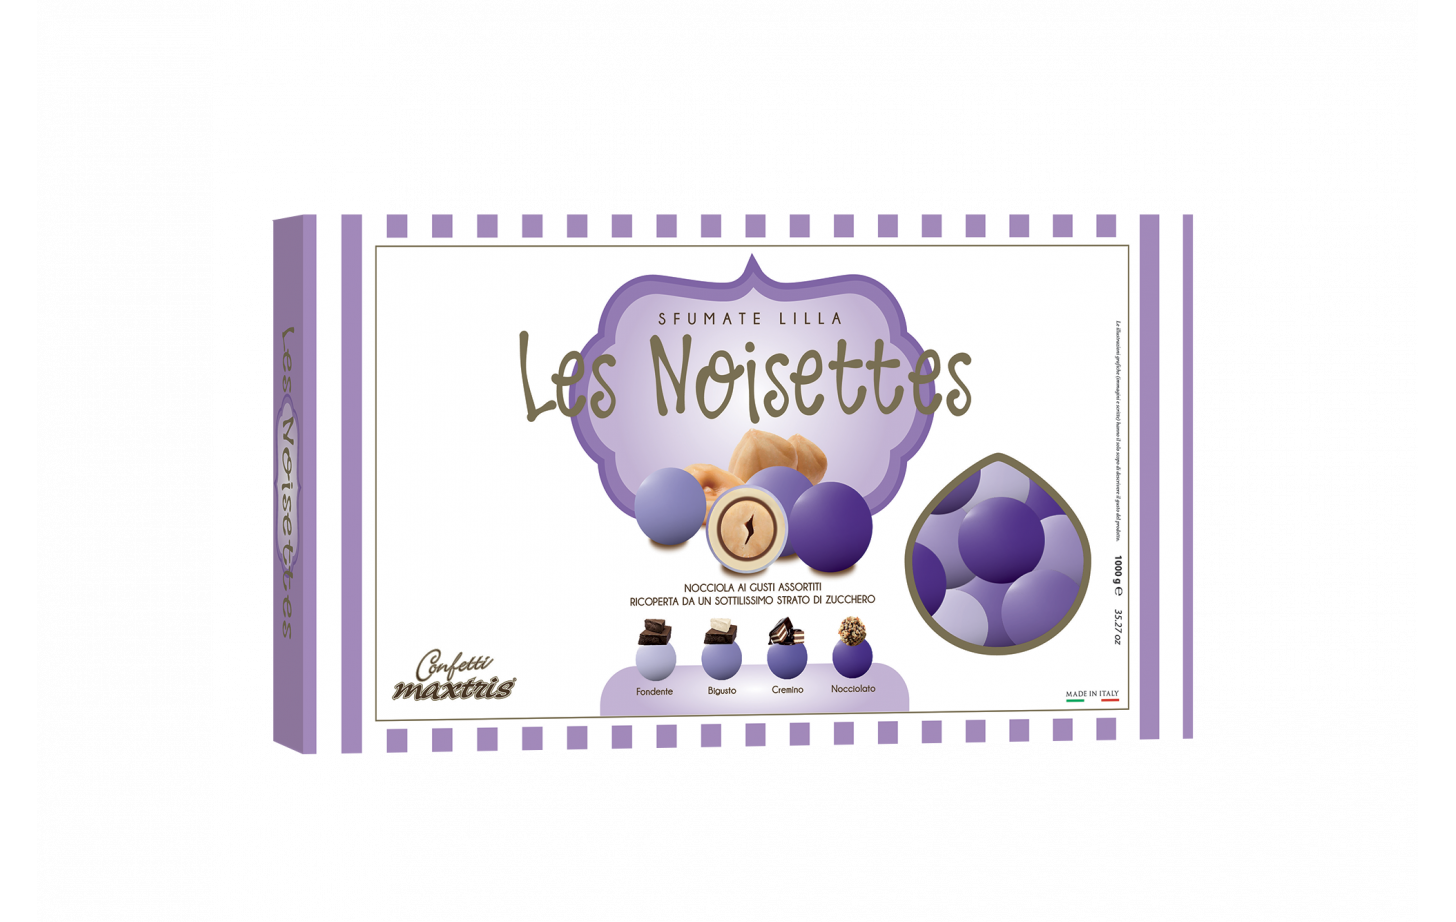 Confetti Maxtris Les noisettes sfumate lilla 1kg